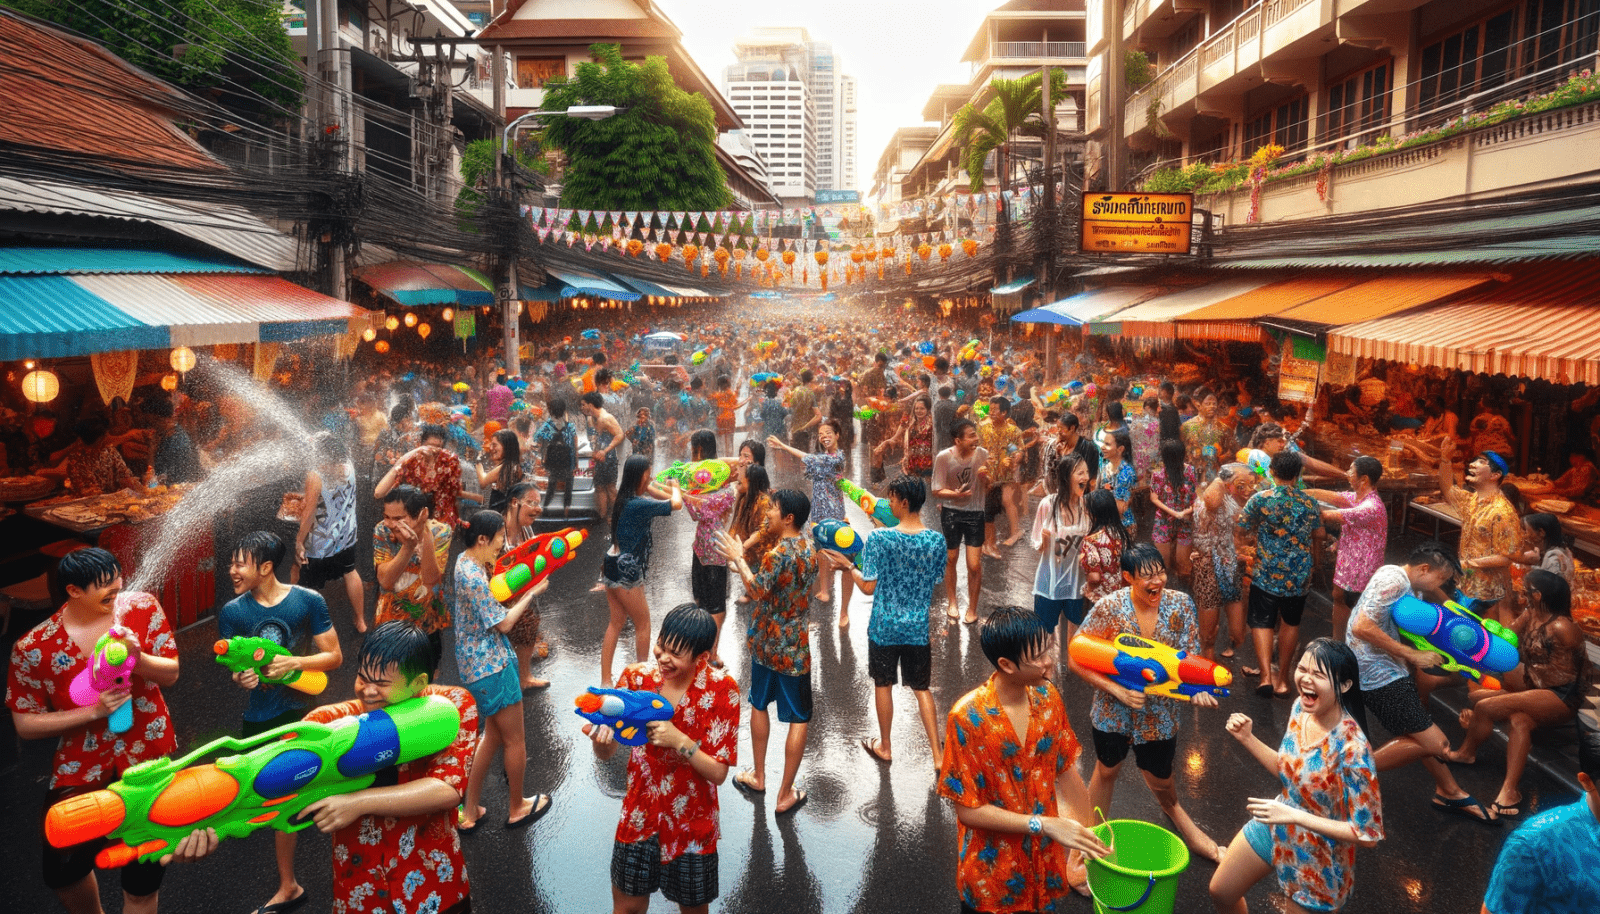 Songkran Festival parties in Thailand